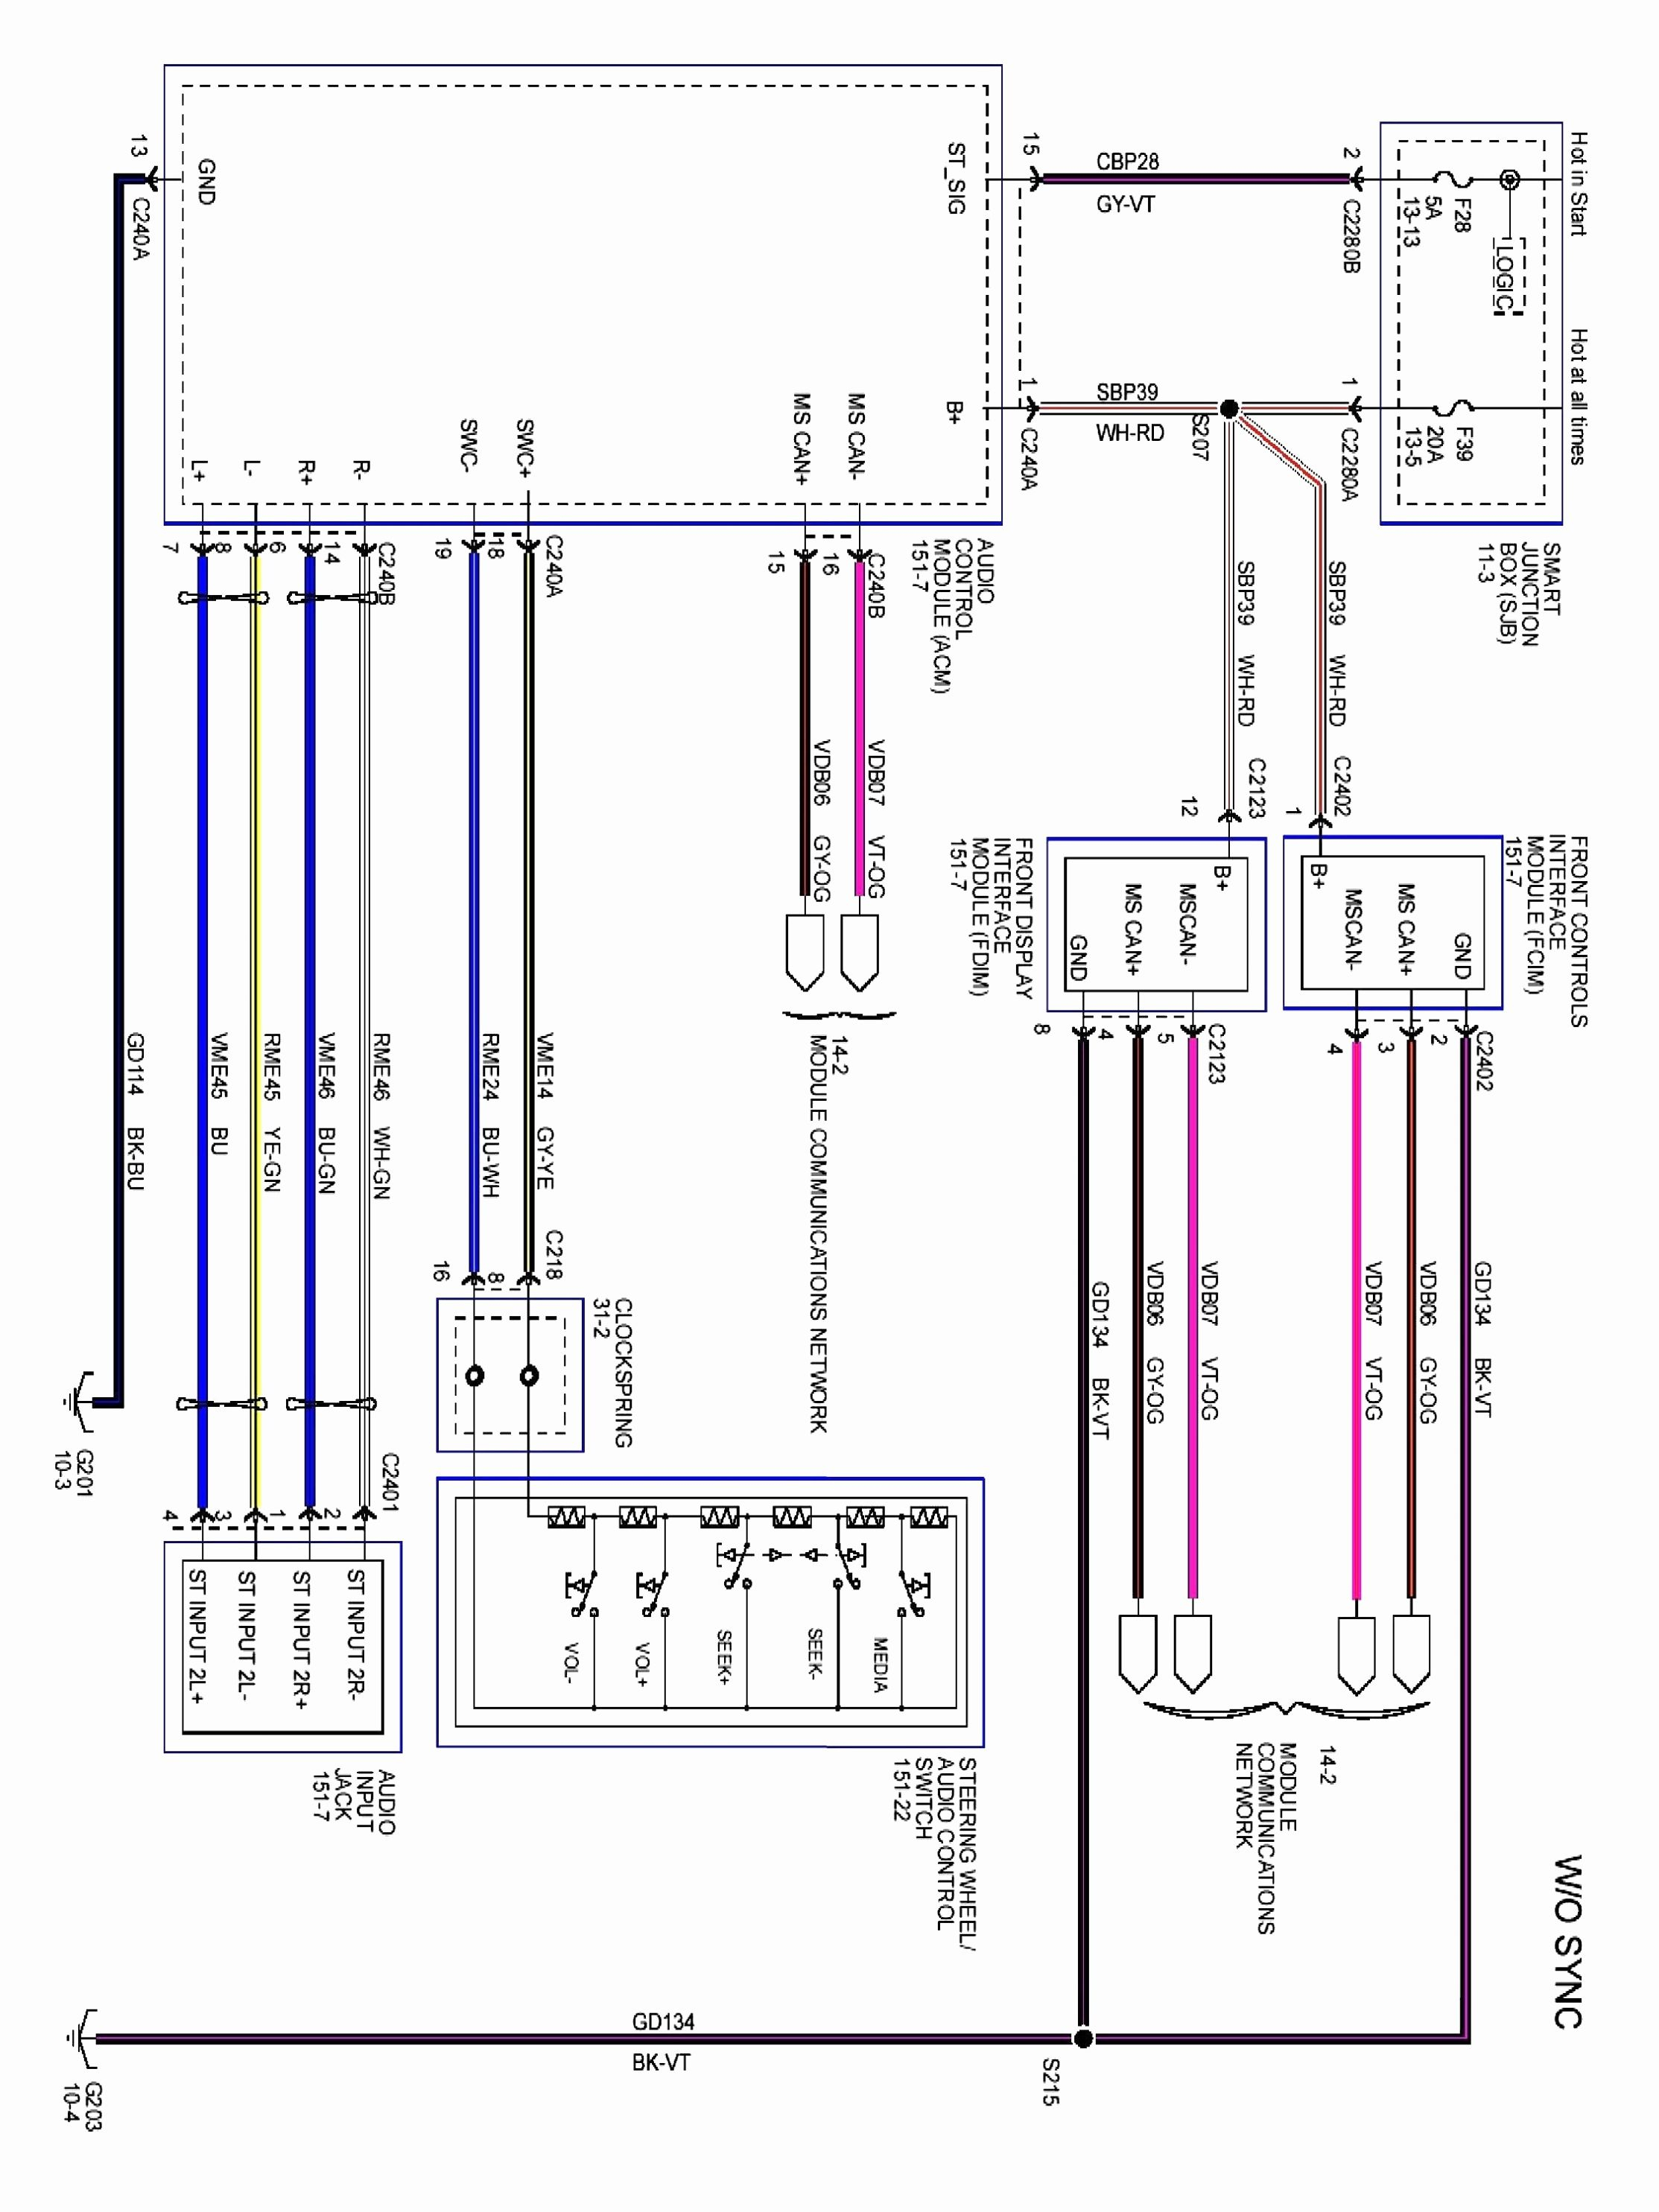 1995 Fleetwood Rv Wiring Diagram - Trusted Wiring Diagram - Fleetwood Rv Wiring Diagram